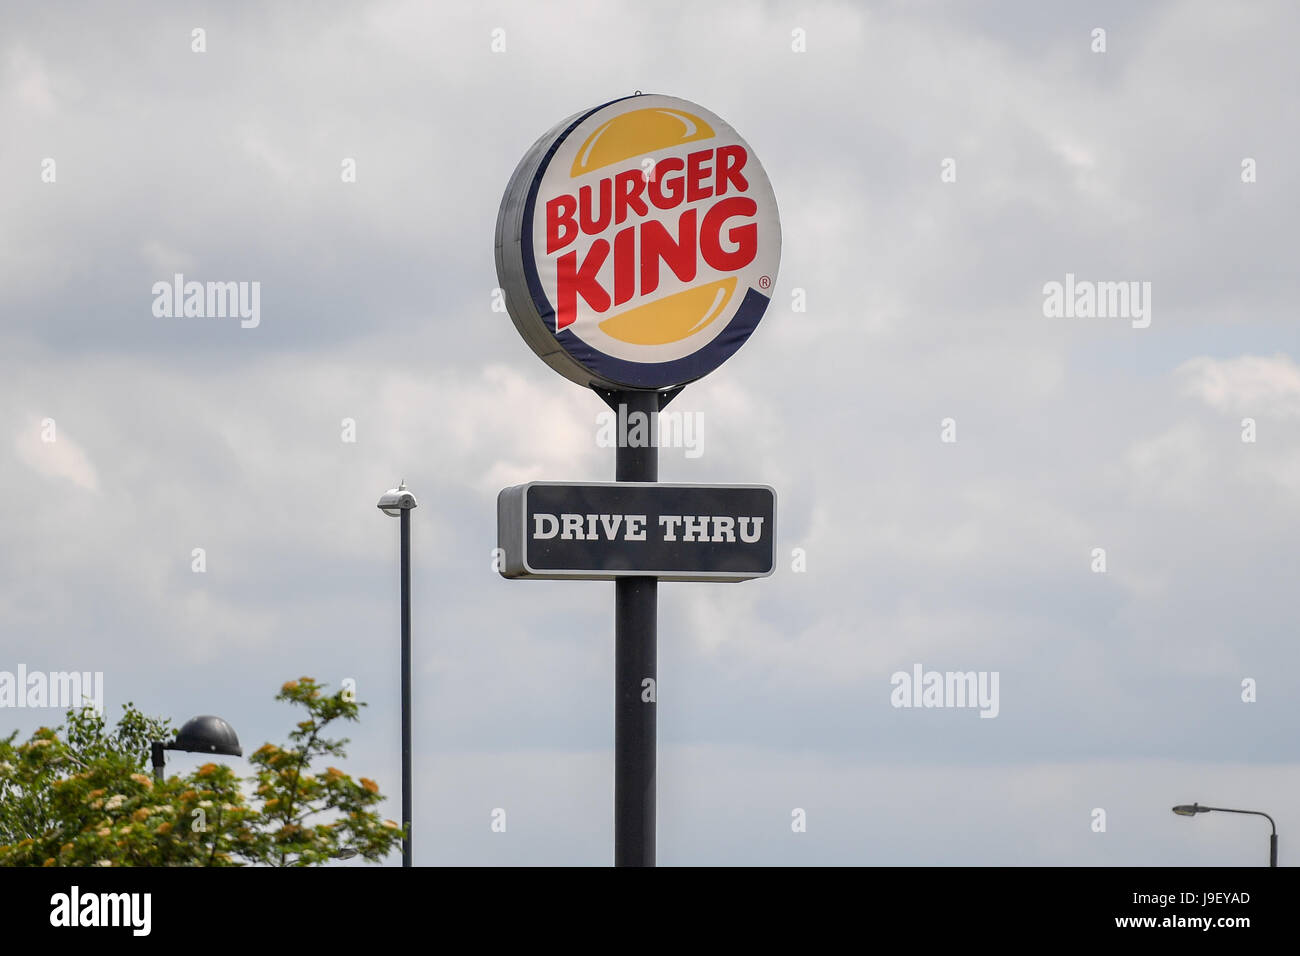 Burger King fast food restaurant sign Stock Photo